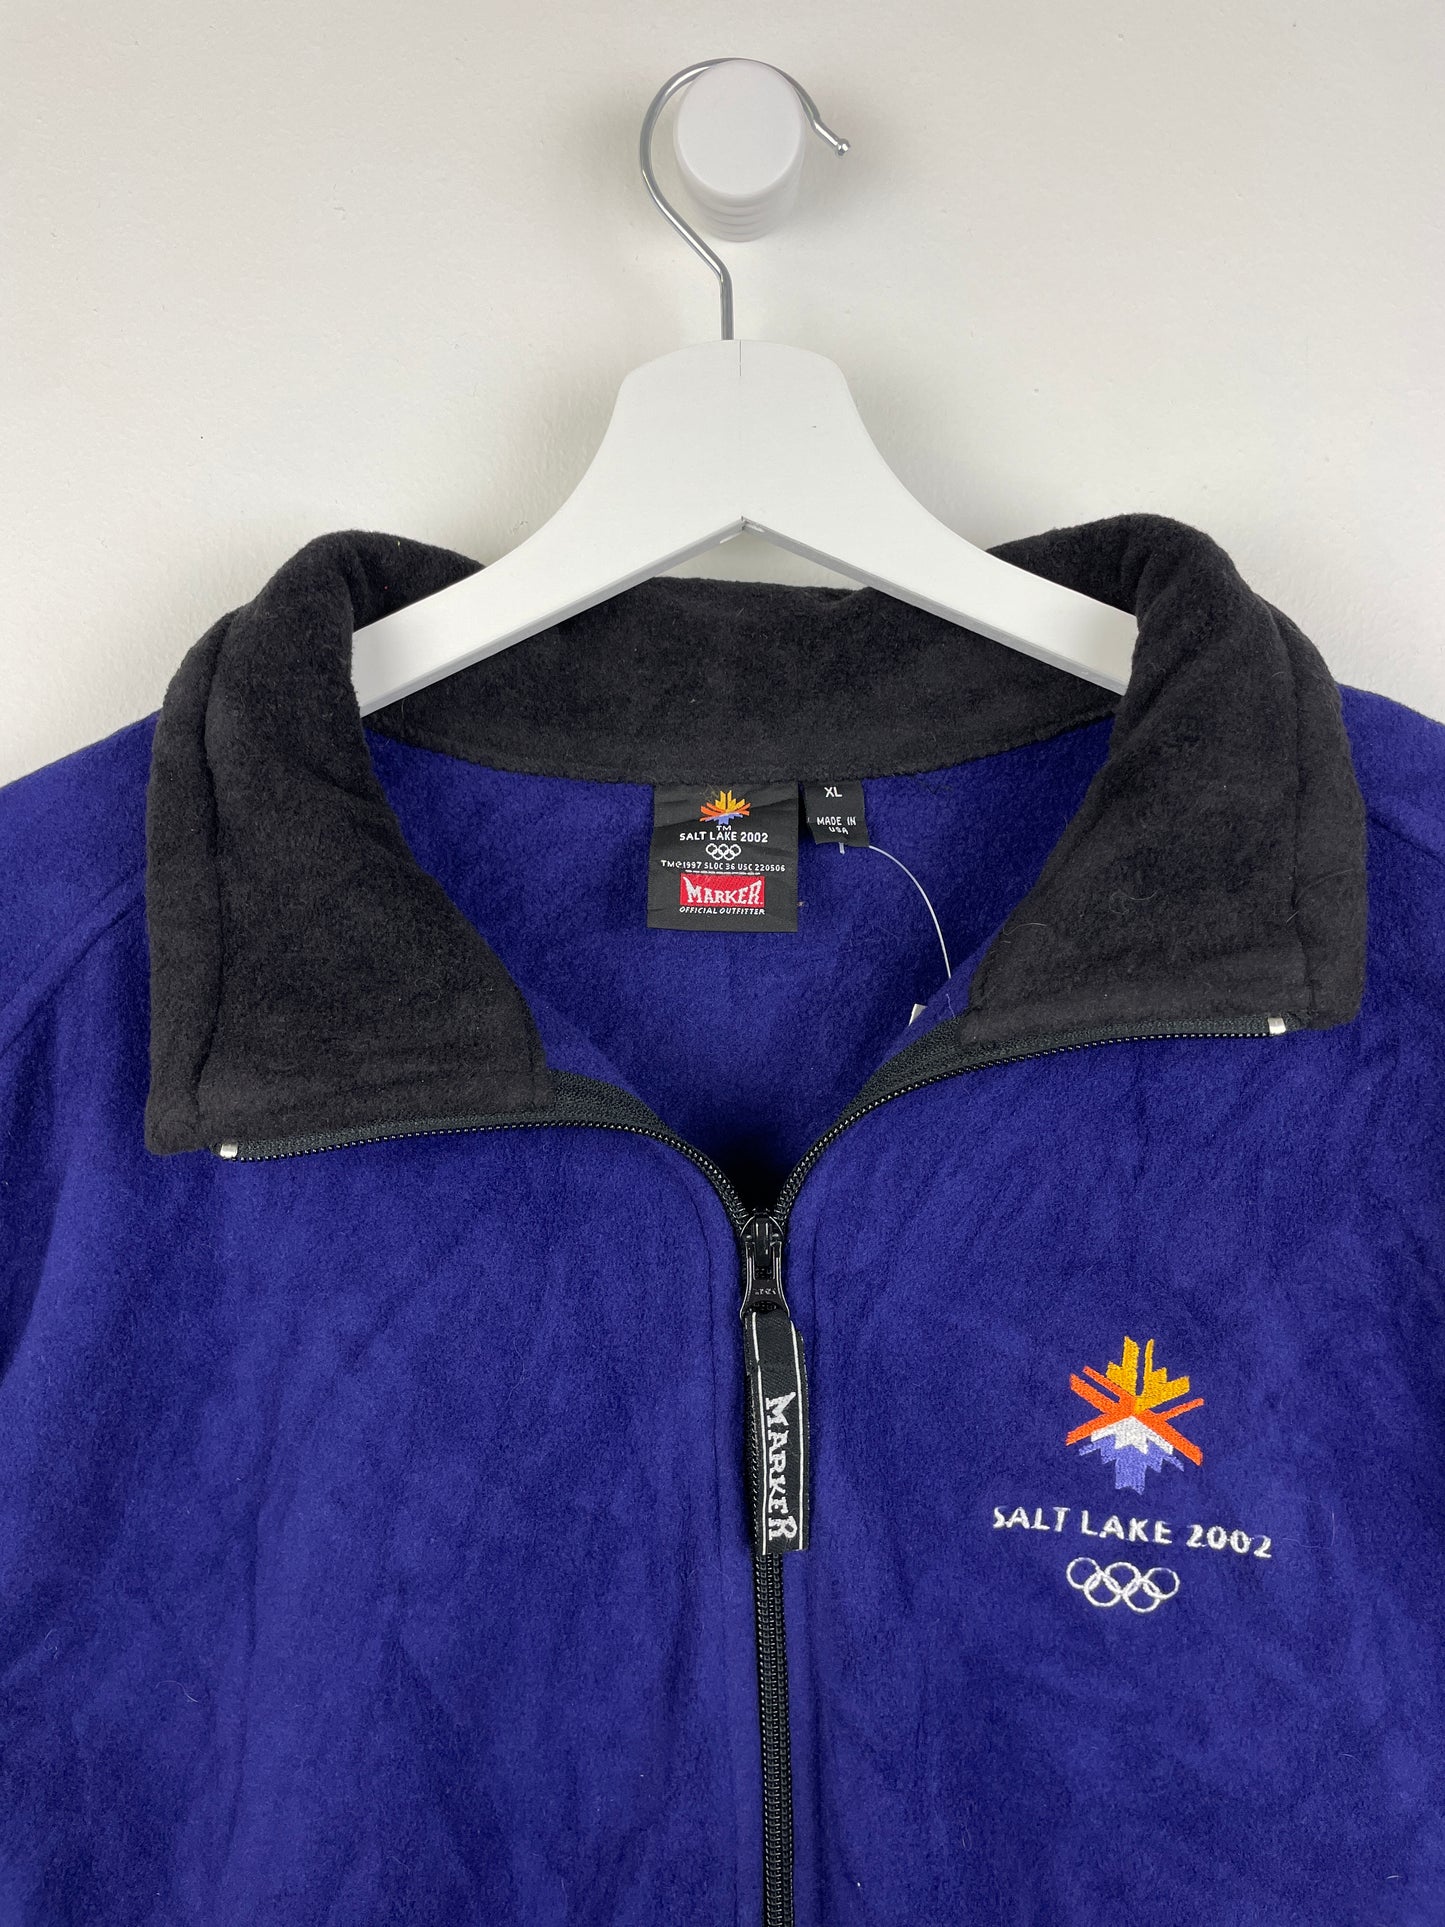 2002 Olympics Fleece Vest